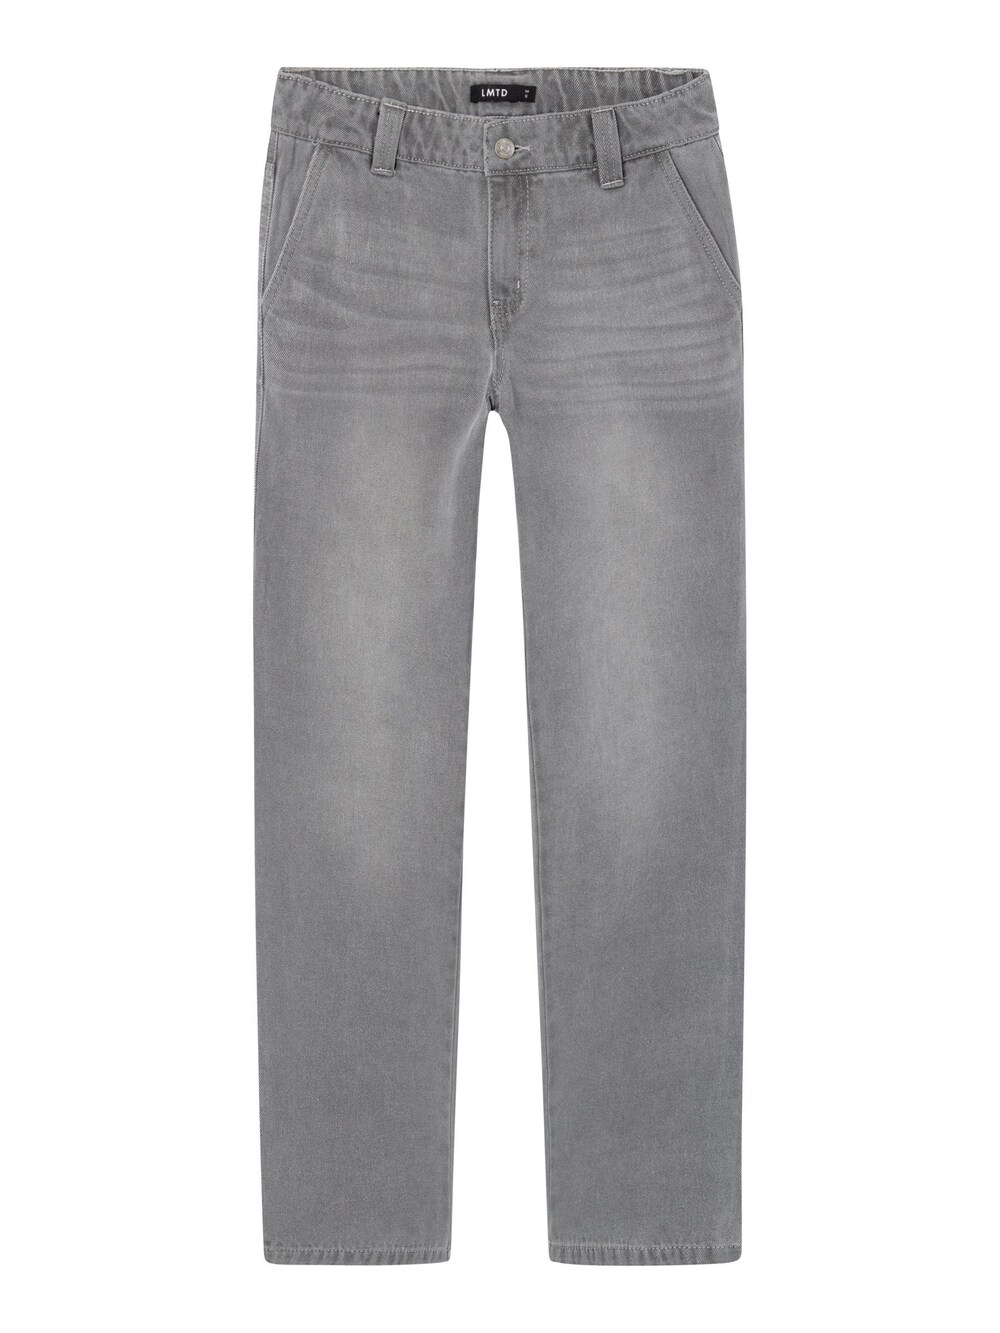 Обычные джинсы NAME IT, серый